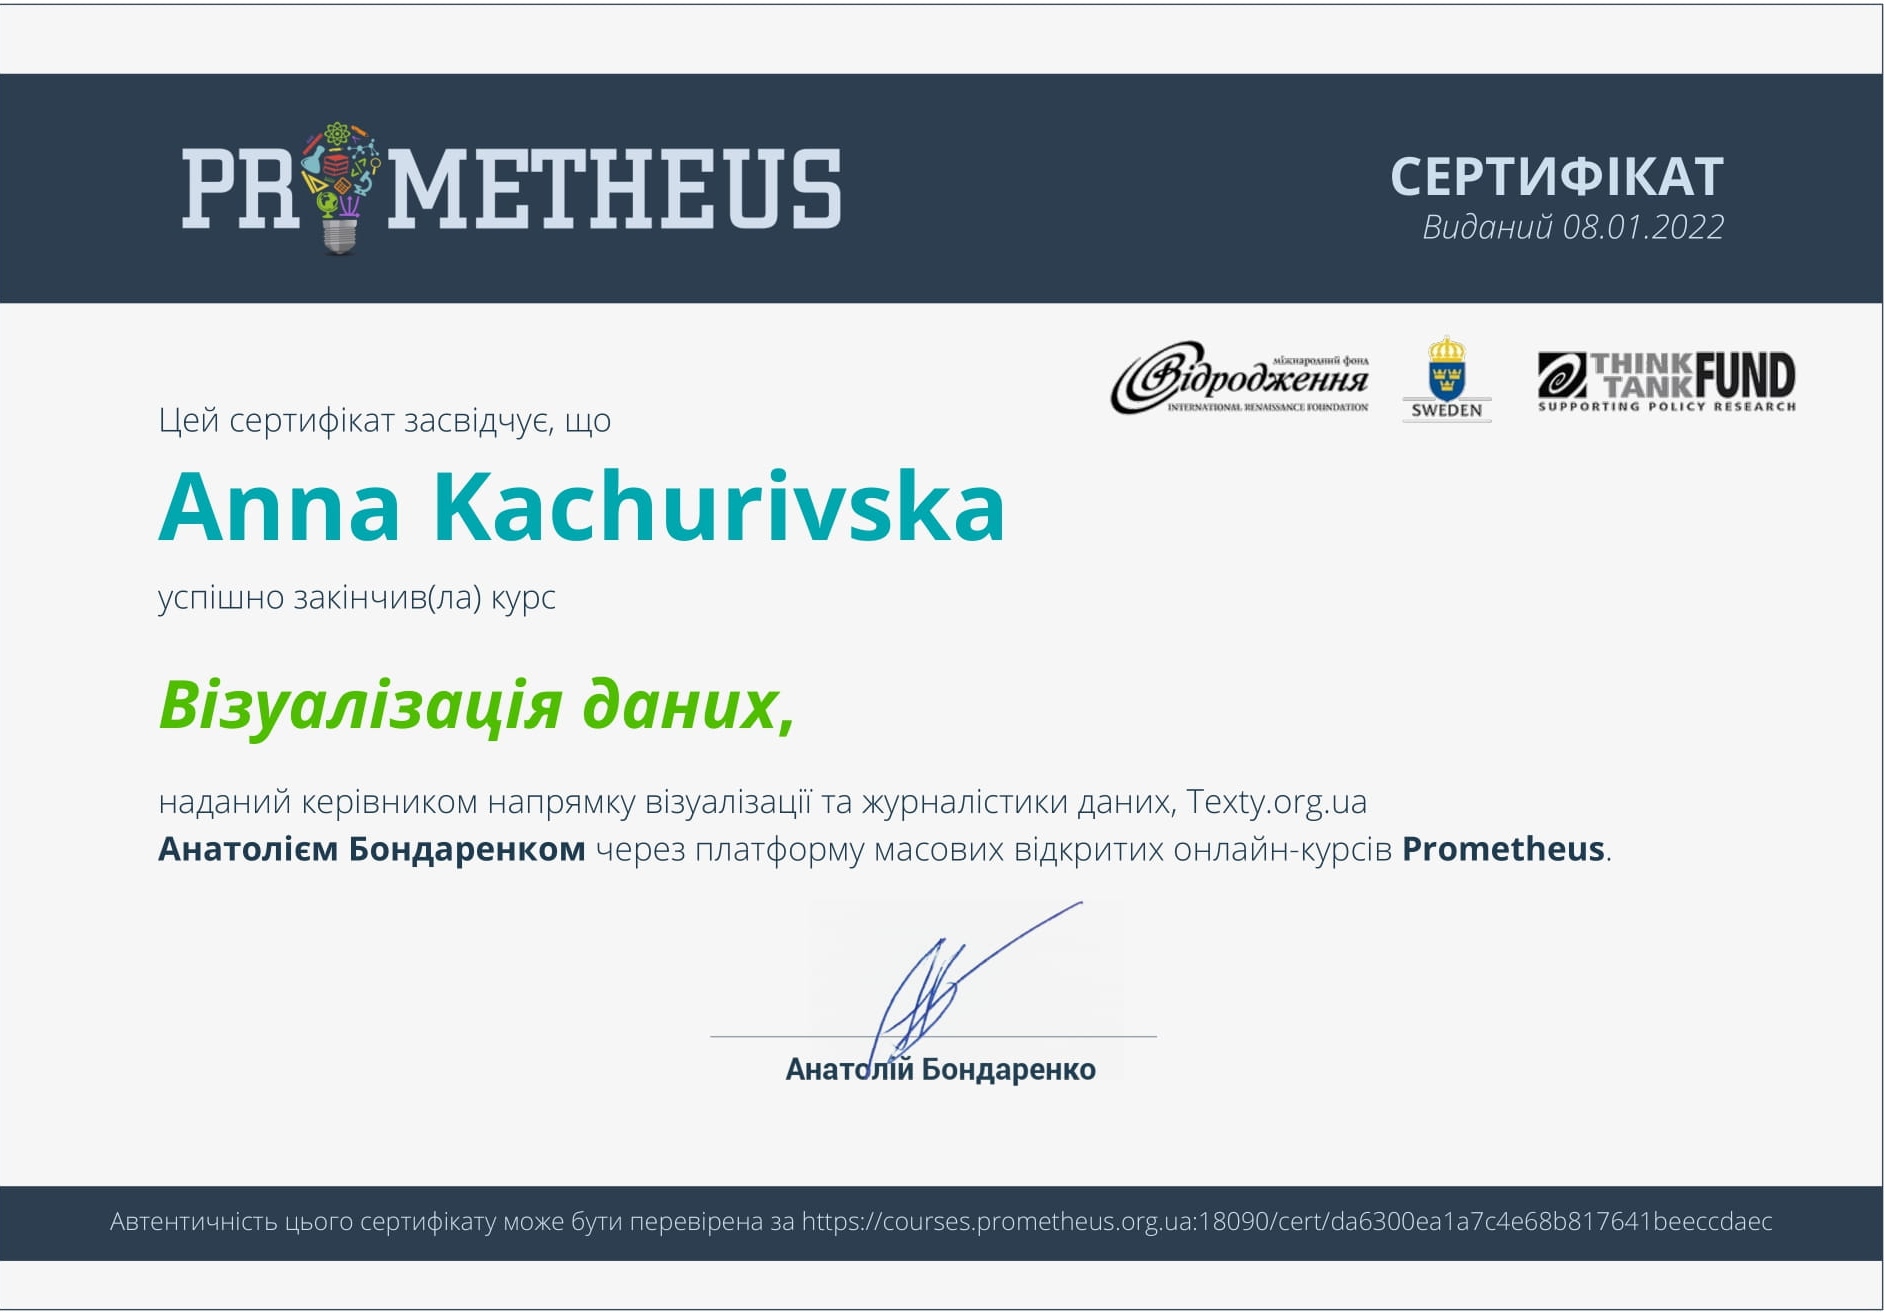 Certificate Prometheus Kachurivska 2022